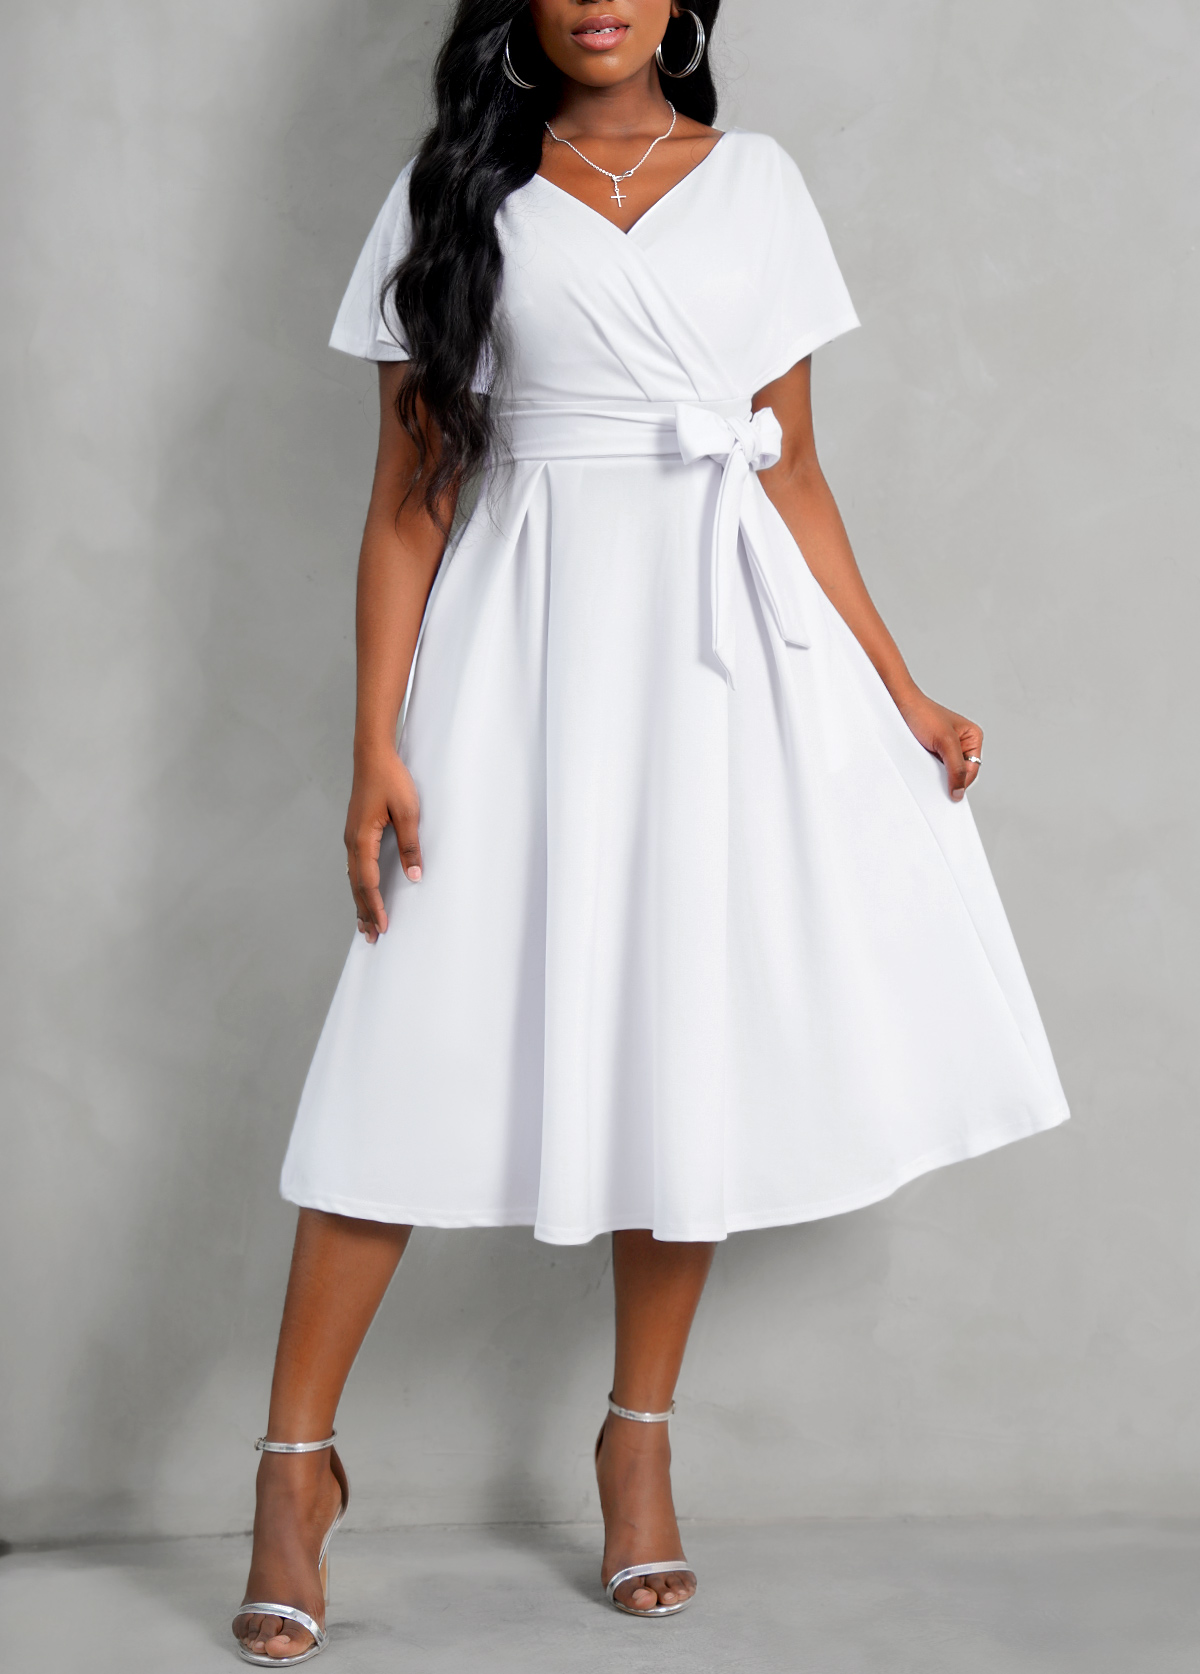 Belted White Cross Front Short Sleeve Dress